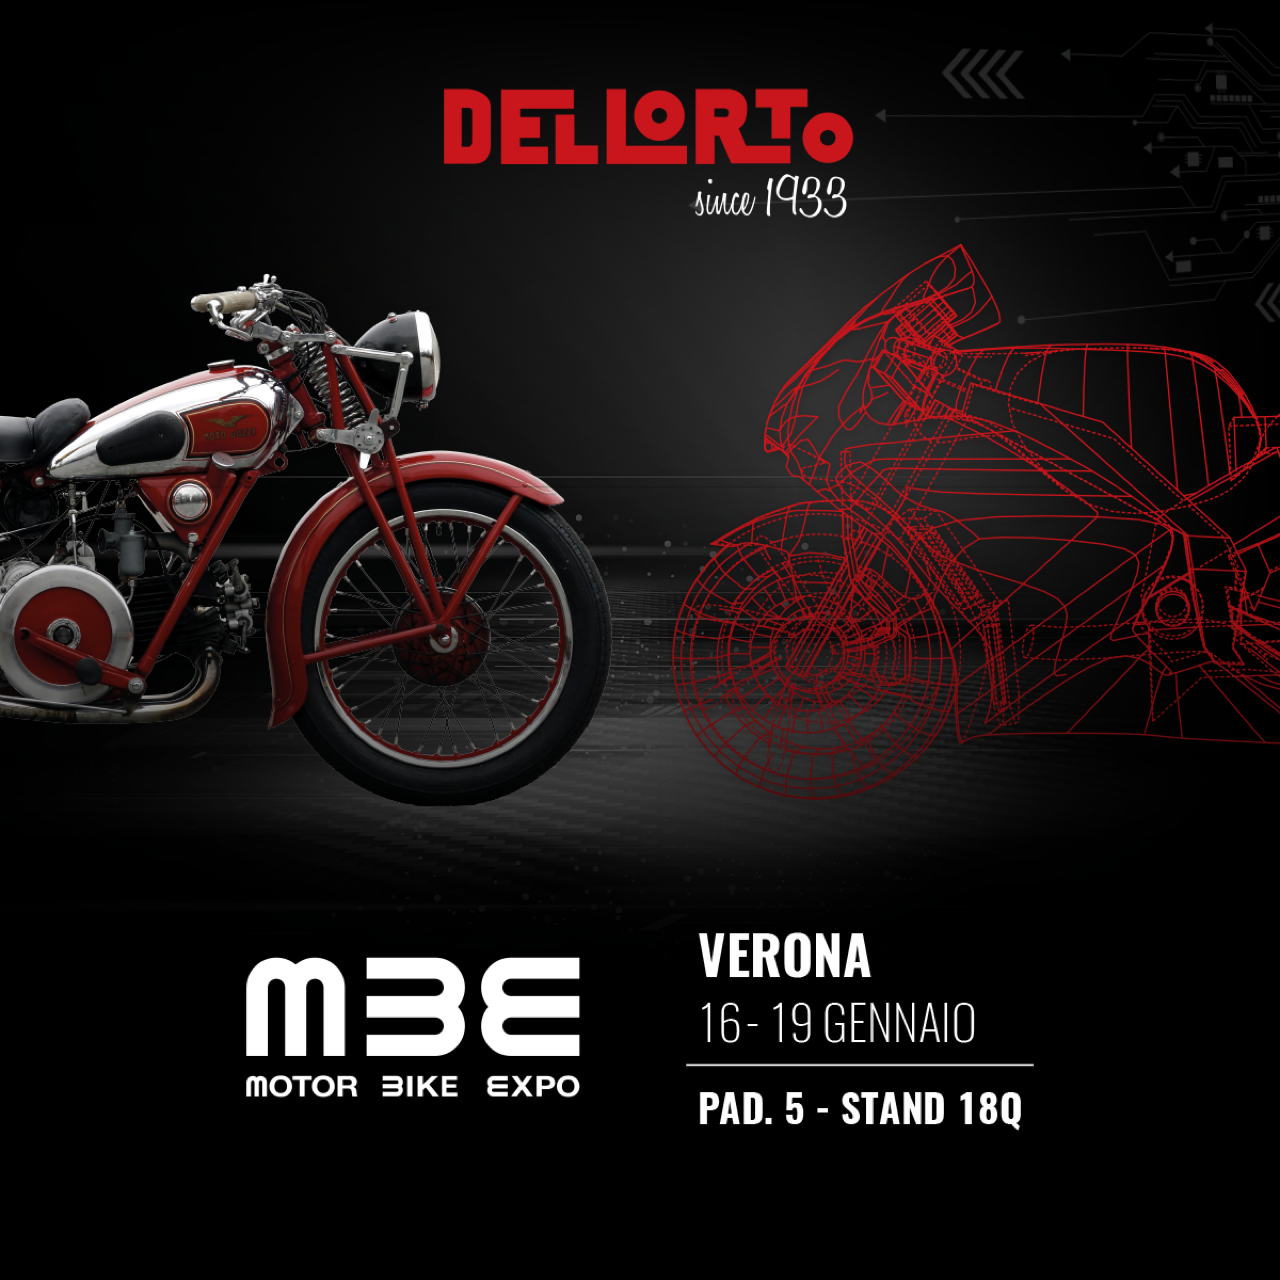 DELLORTO في معرض Motor Bike Expo 2020 - الصورة